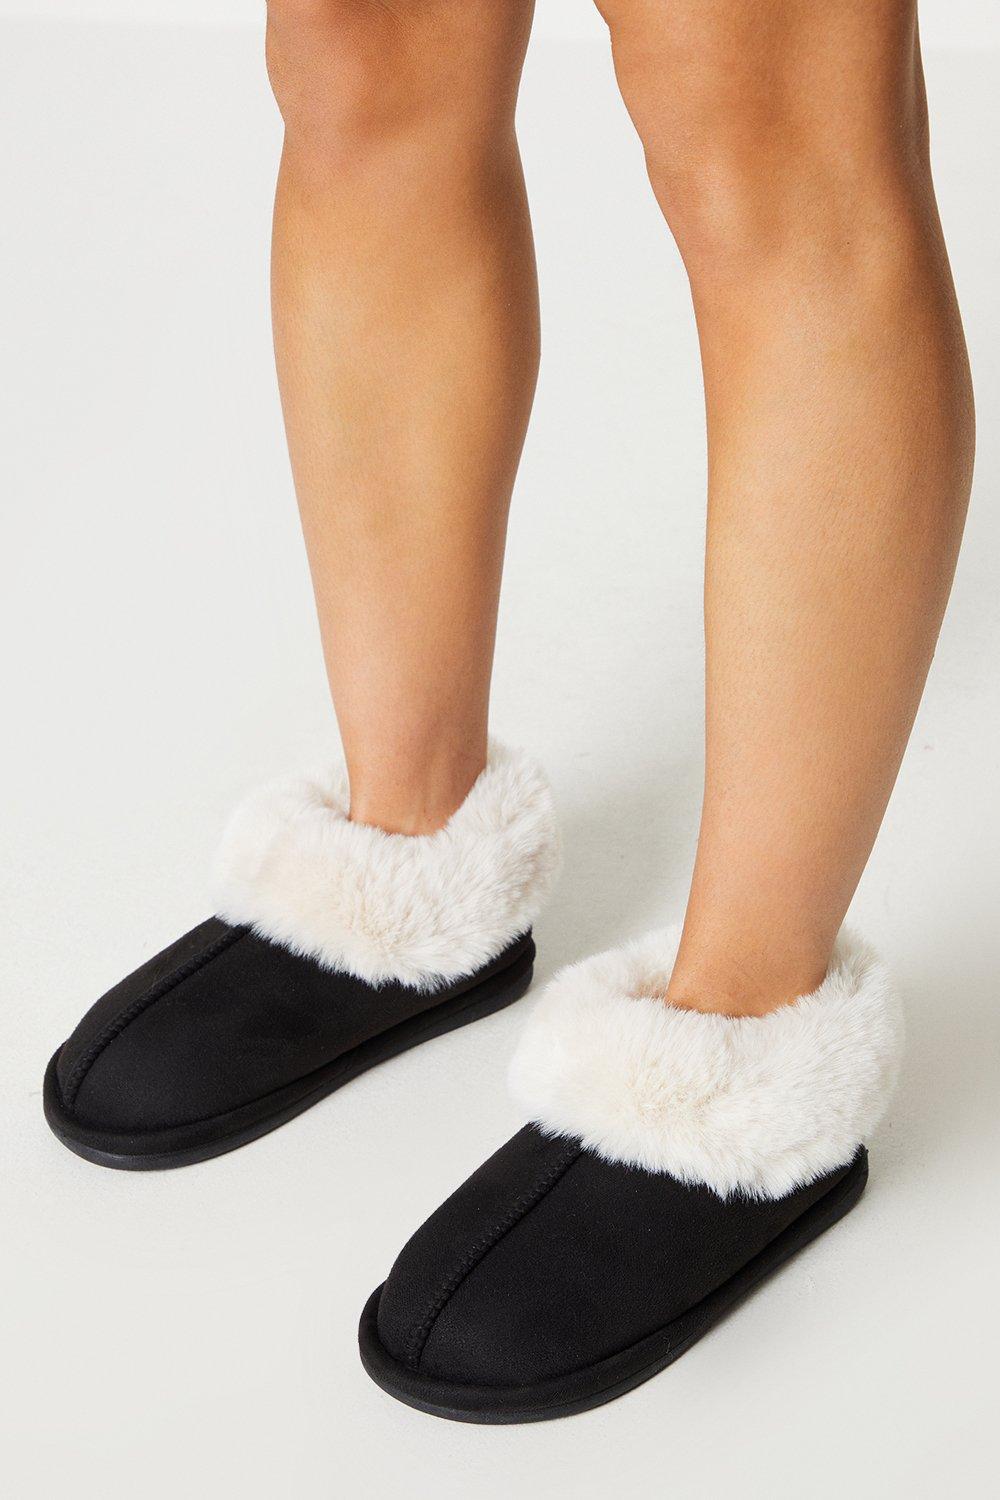 Women’s Maggi Faux Fur Sheepskin Fur Bootie Slippers - natural black - 6